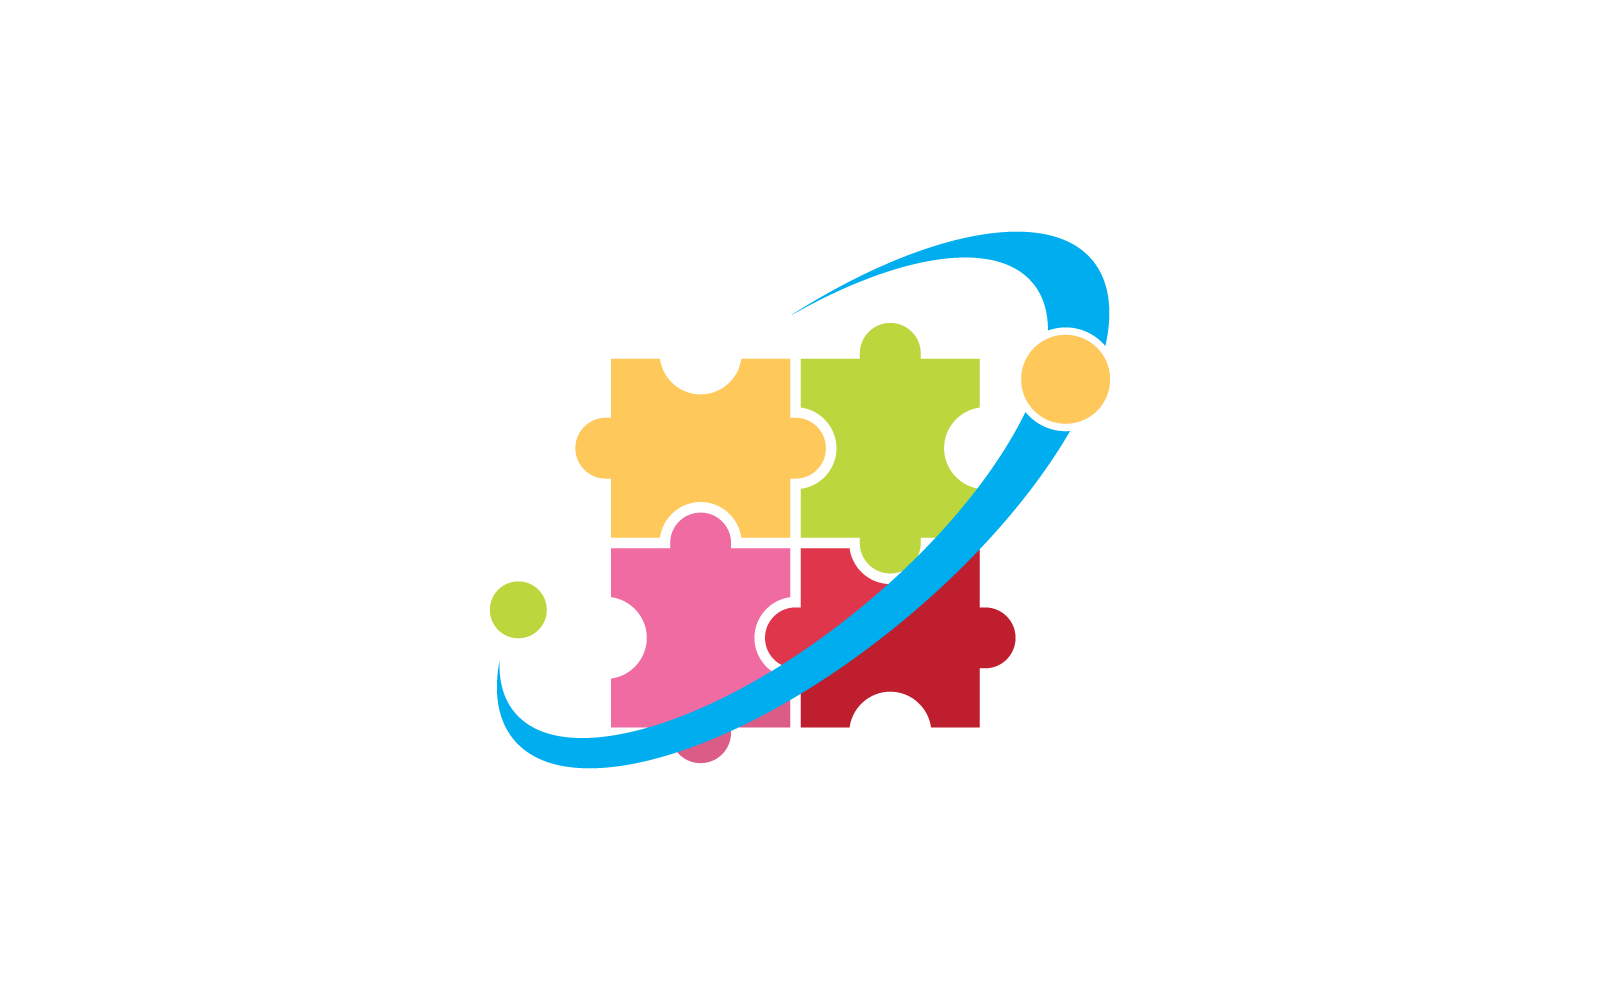 Disability logo, family care, or Community care logo vector template Logo Template